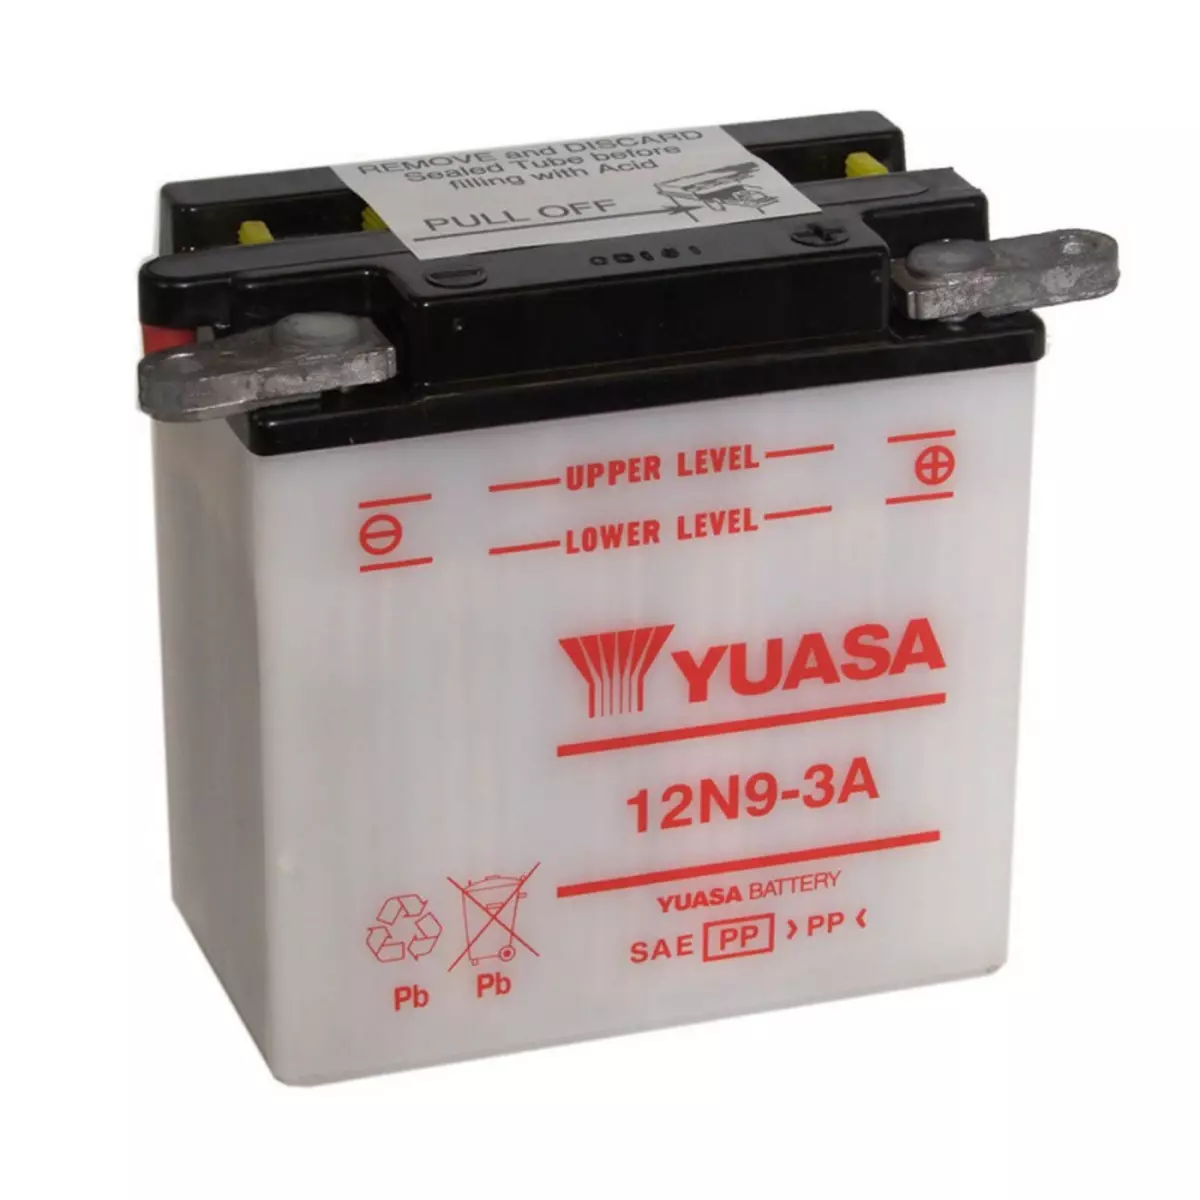 YUASA Batterie moto YUASA 12N9-3A 12V 9.5AH 80A